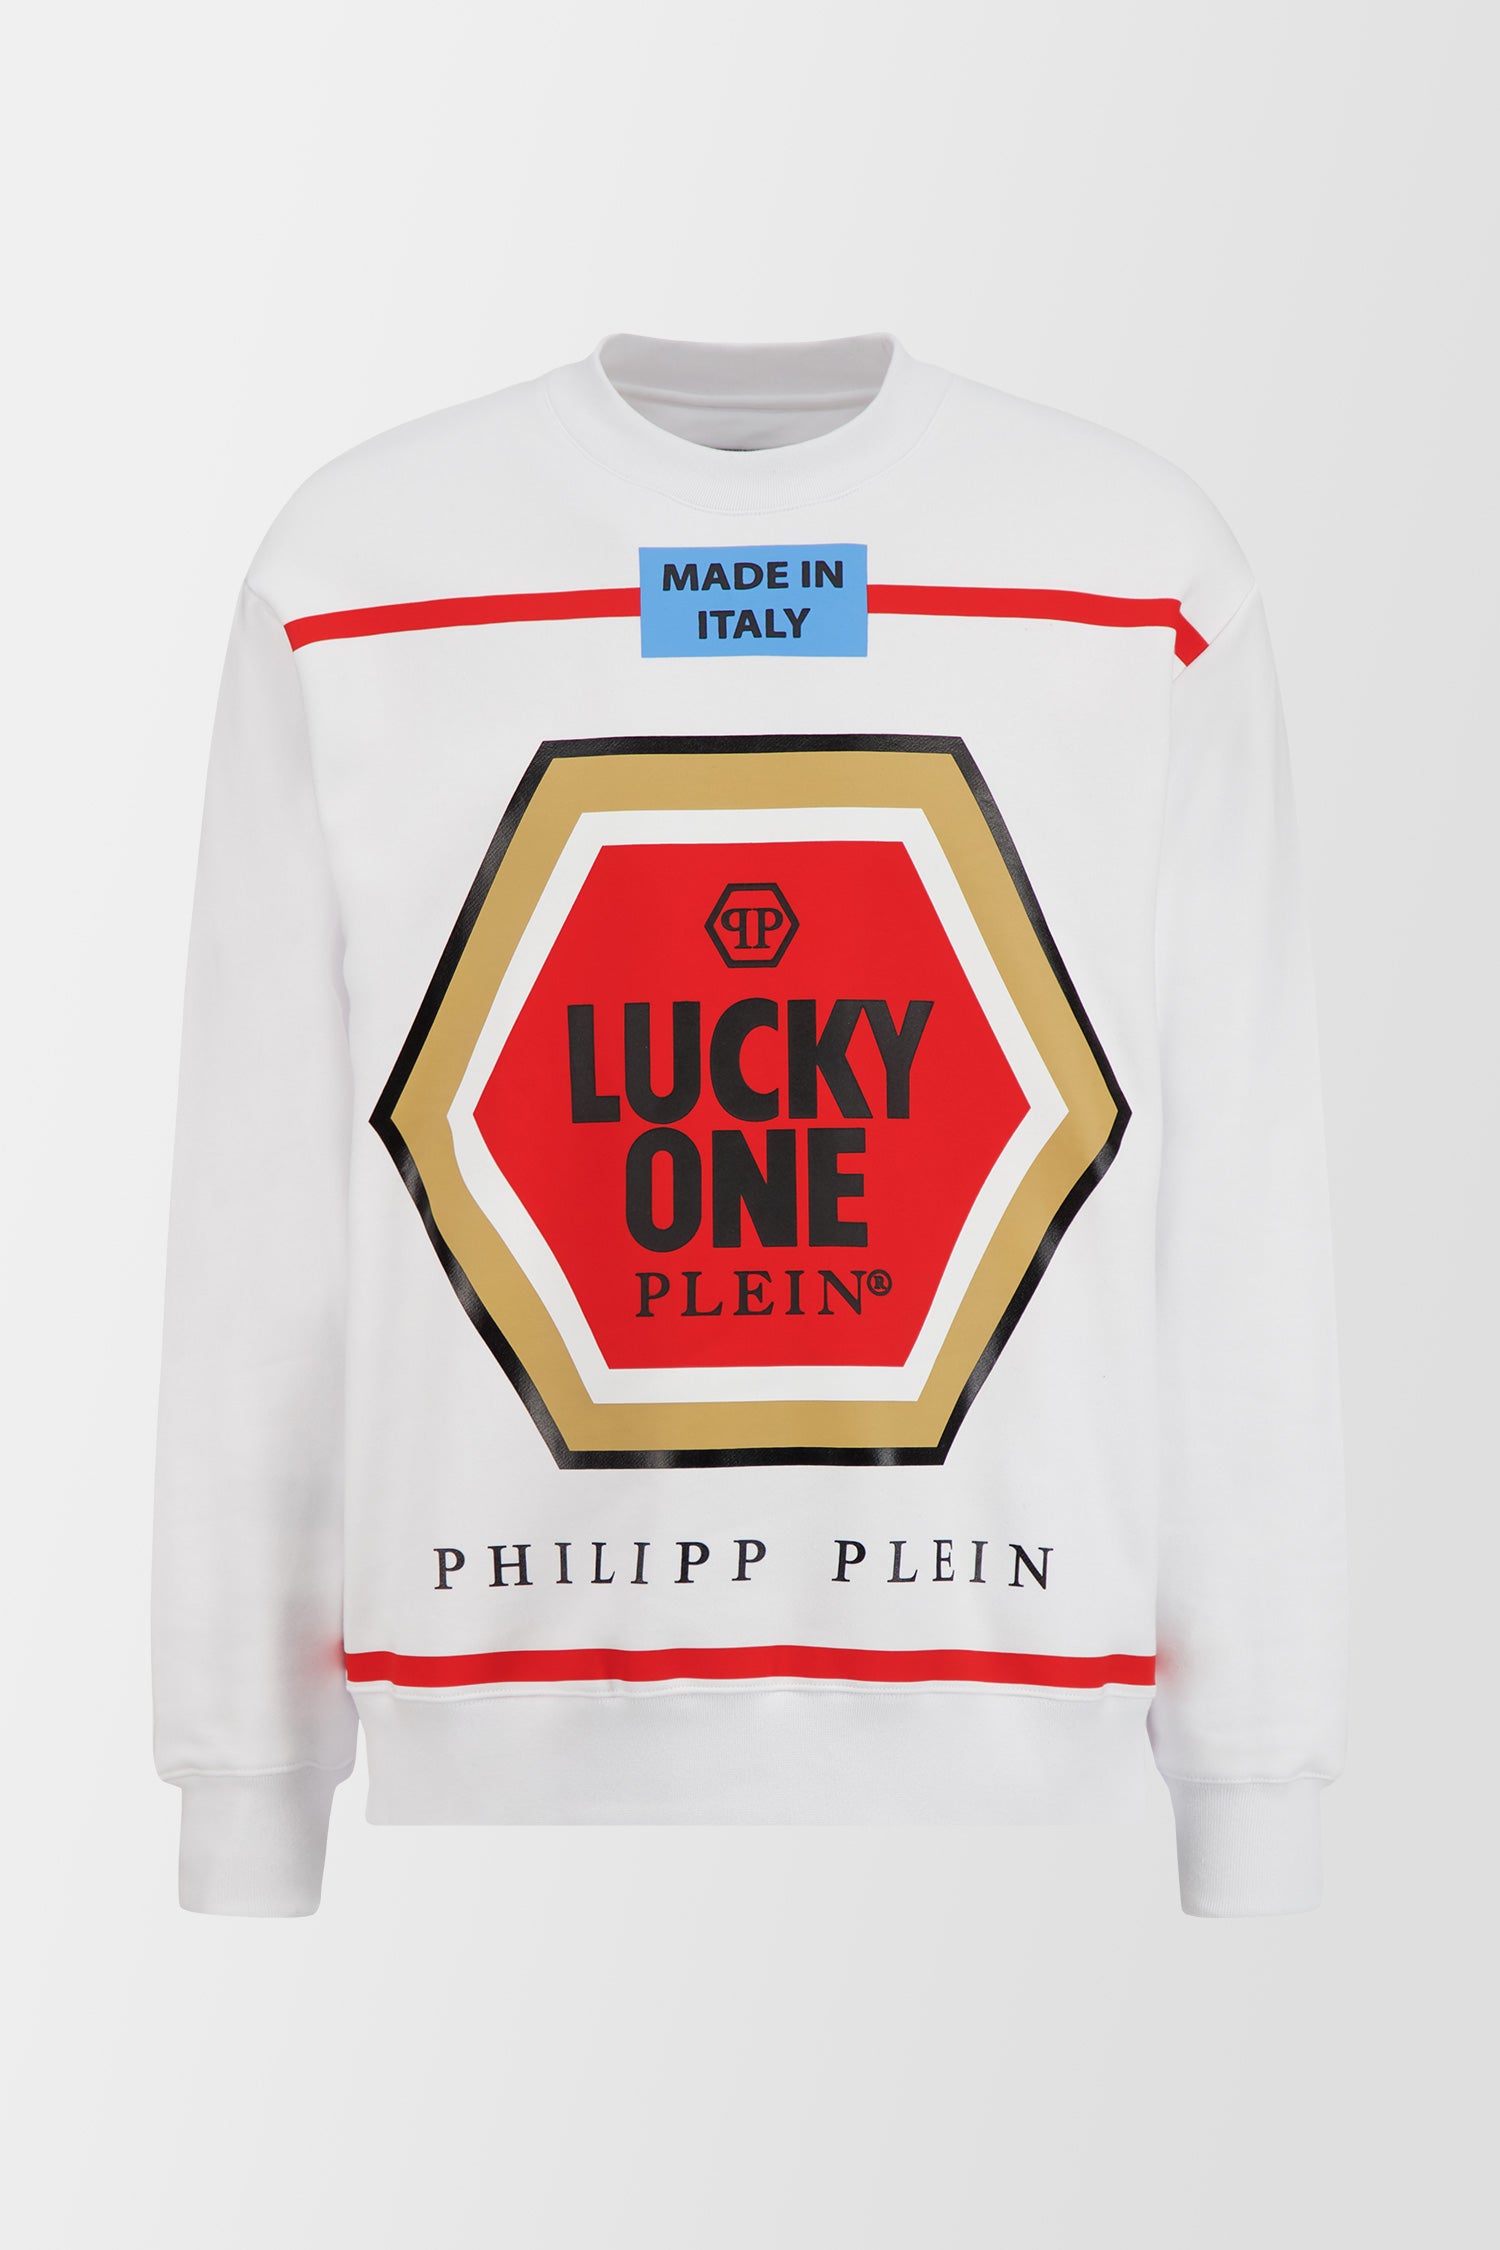 Philipp Plein Lucky One White Sweatshirt